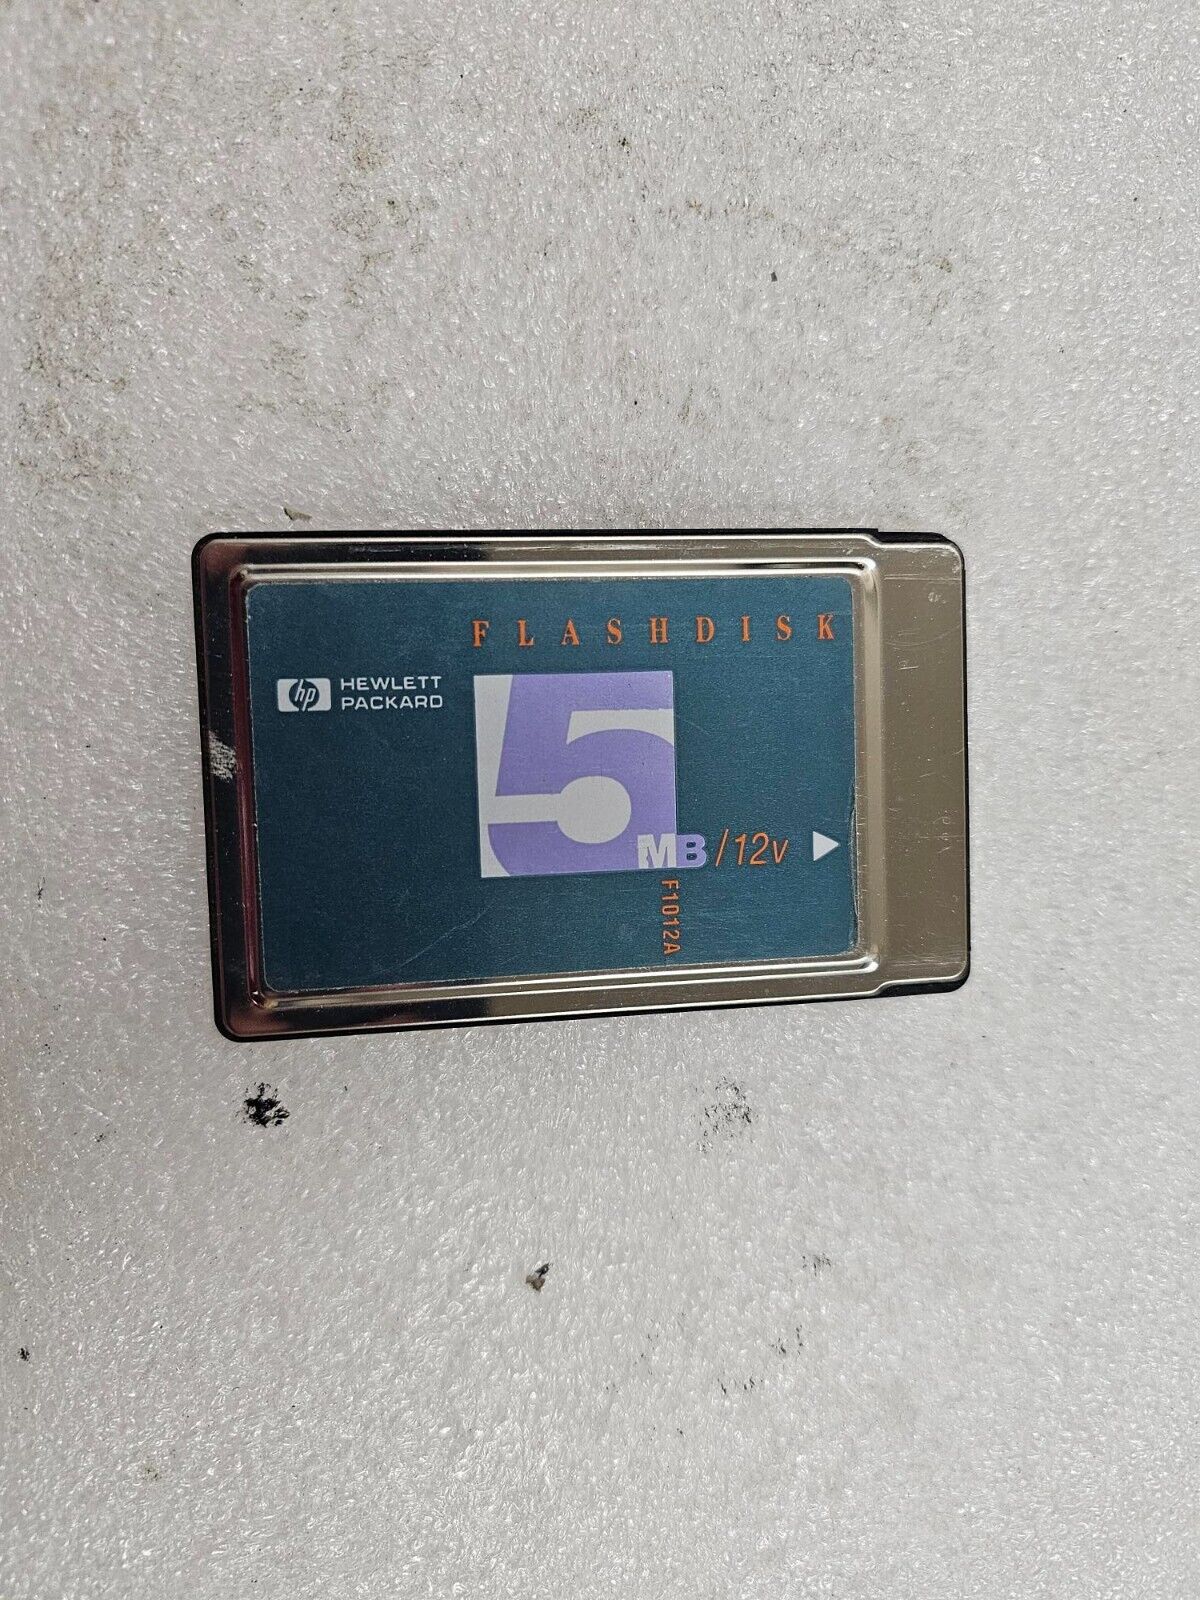 Vintage HP 5MB / 12v Flash Disk Card F1012A SDP5 for 200LX 100LX 1000CX Palmtop